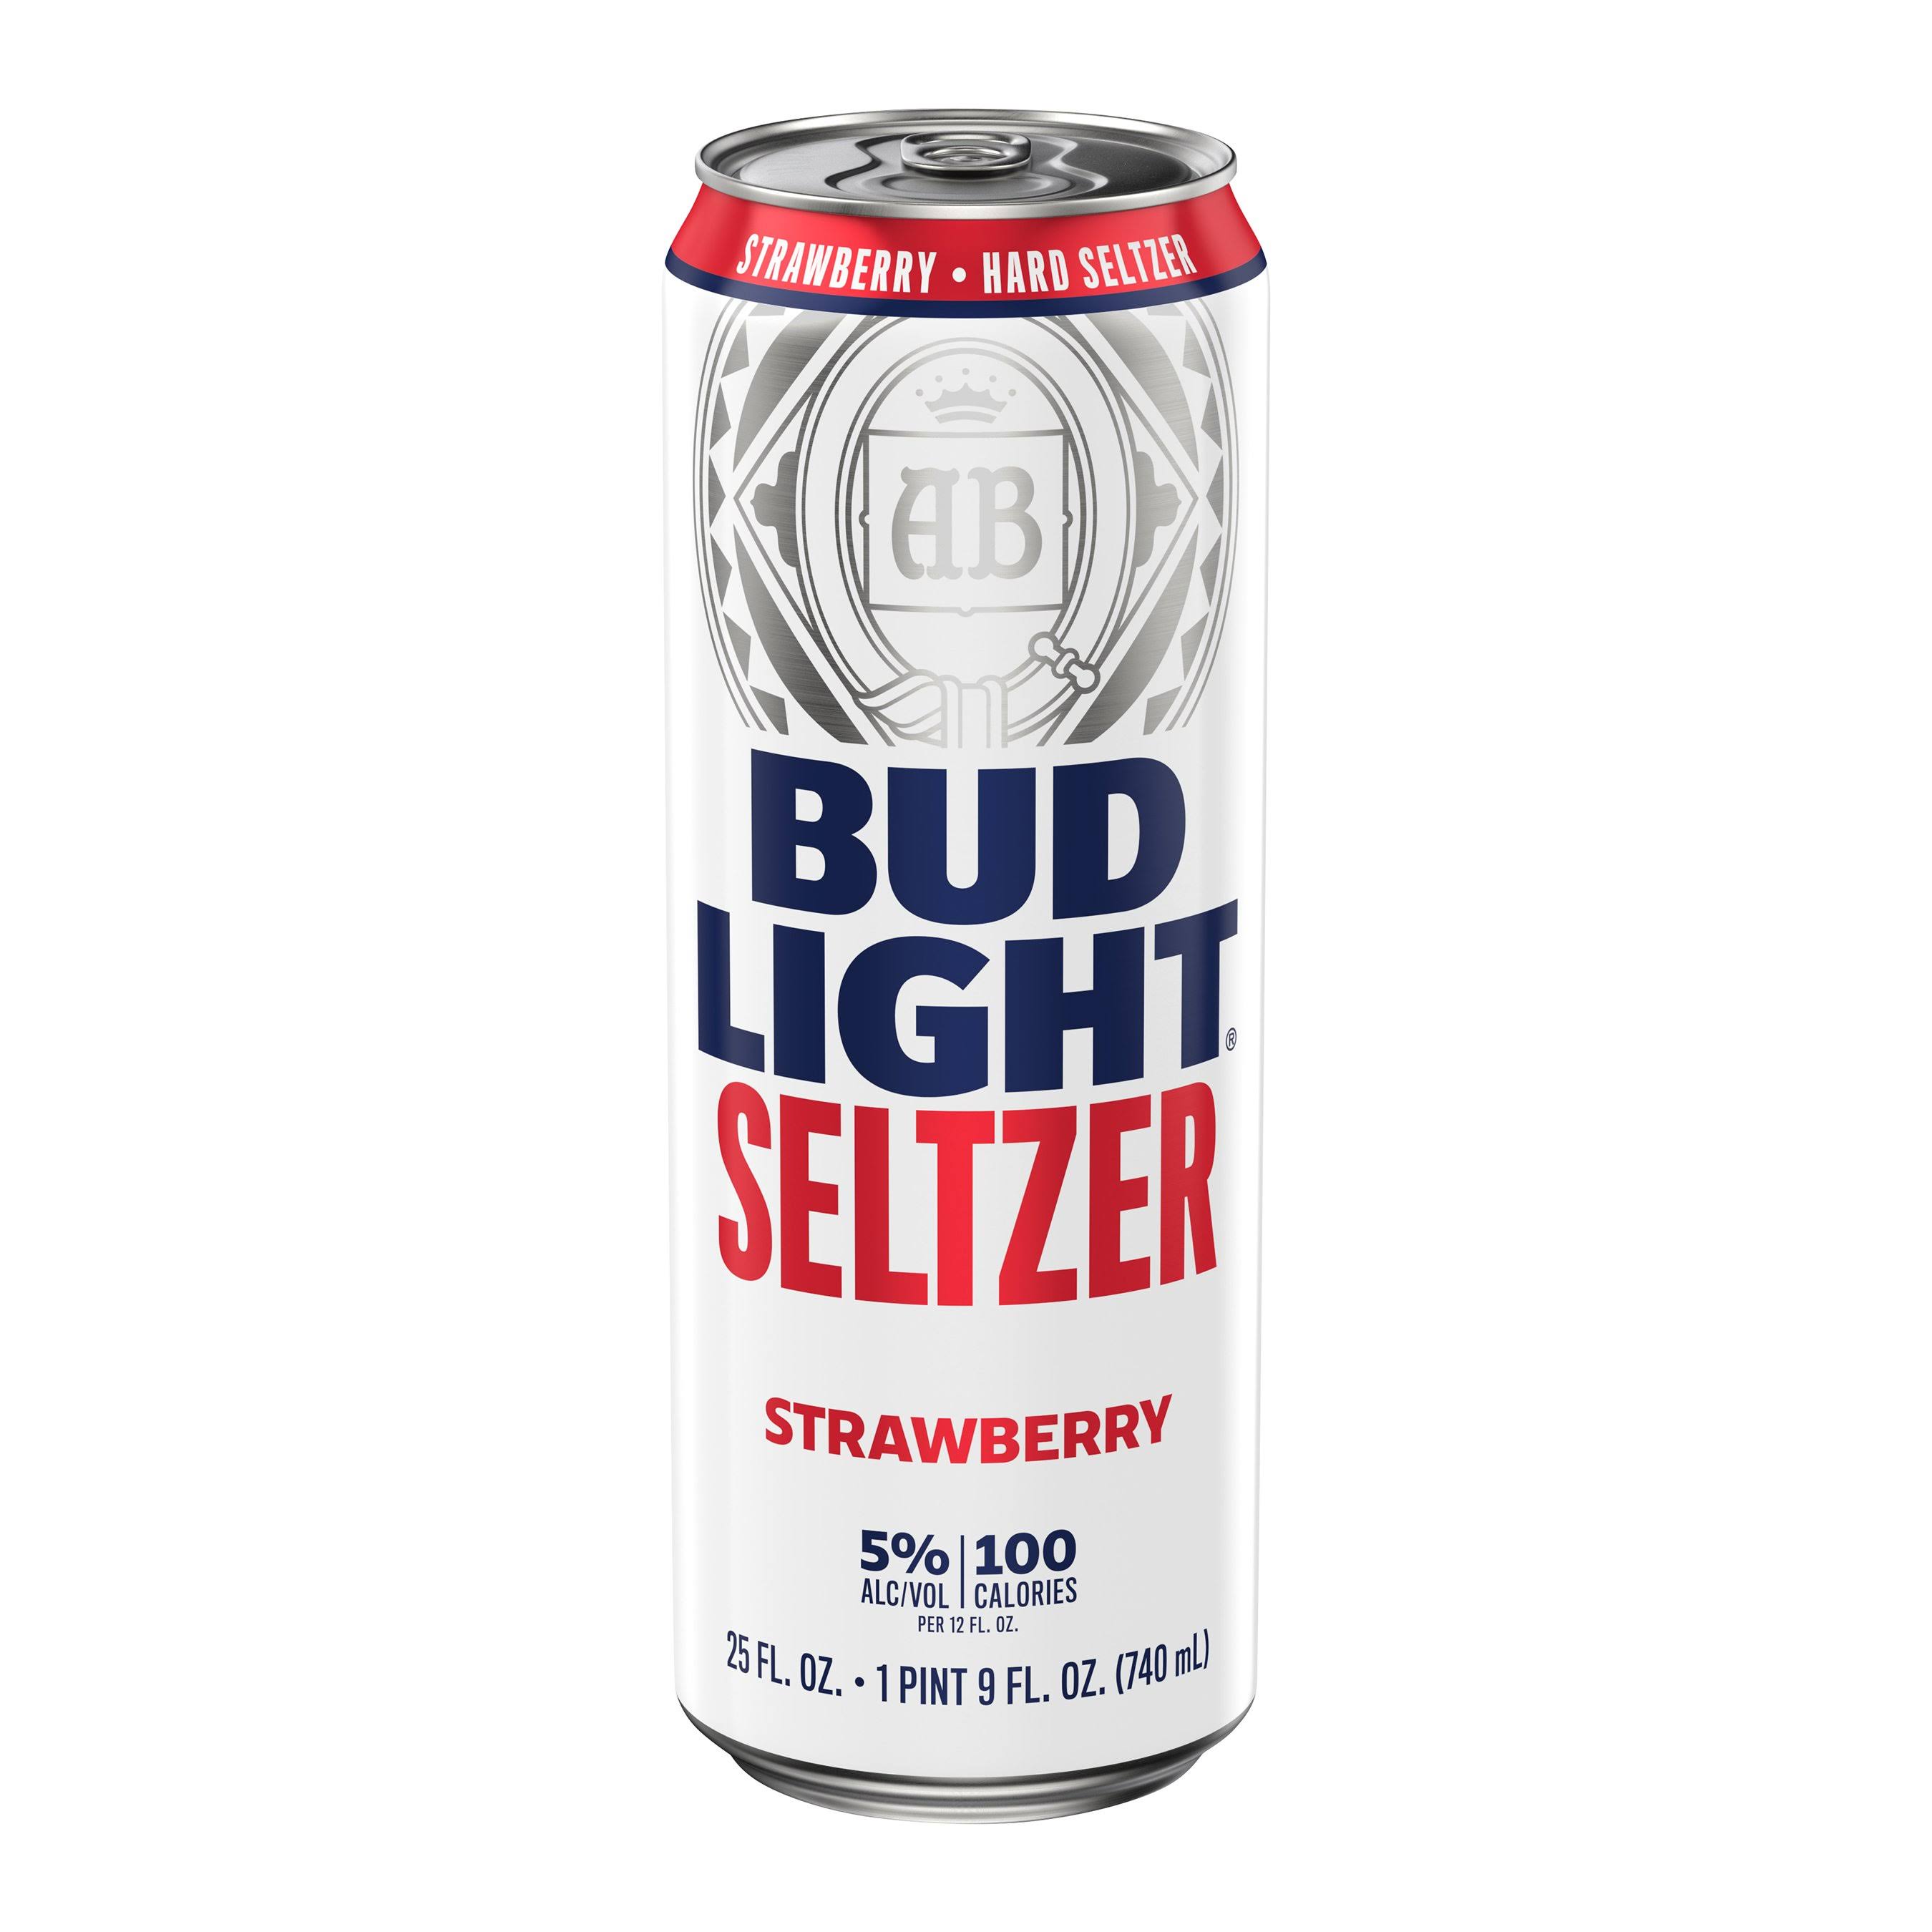 Bud Light Hard Seltzer, Strawberry - 25 fl oz